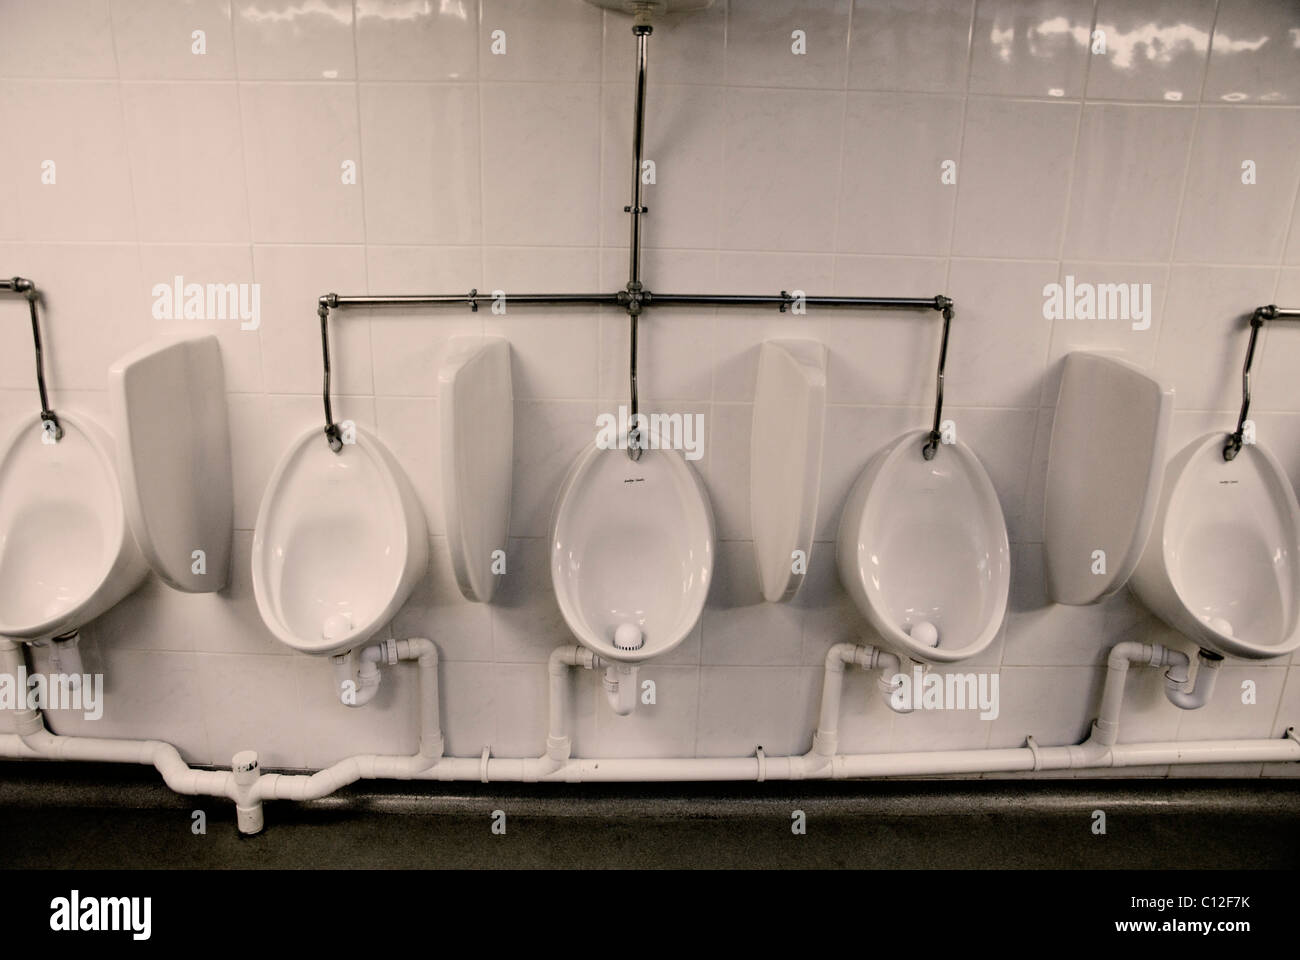 Men's urinals on white tiles Stock Photo